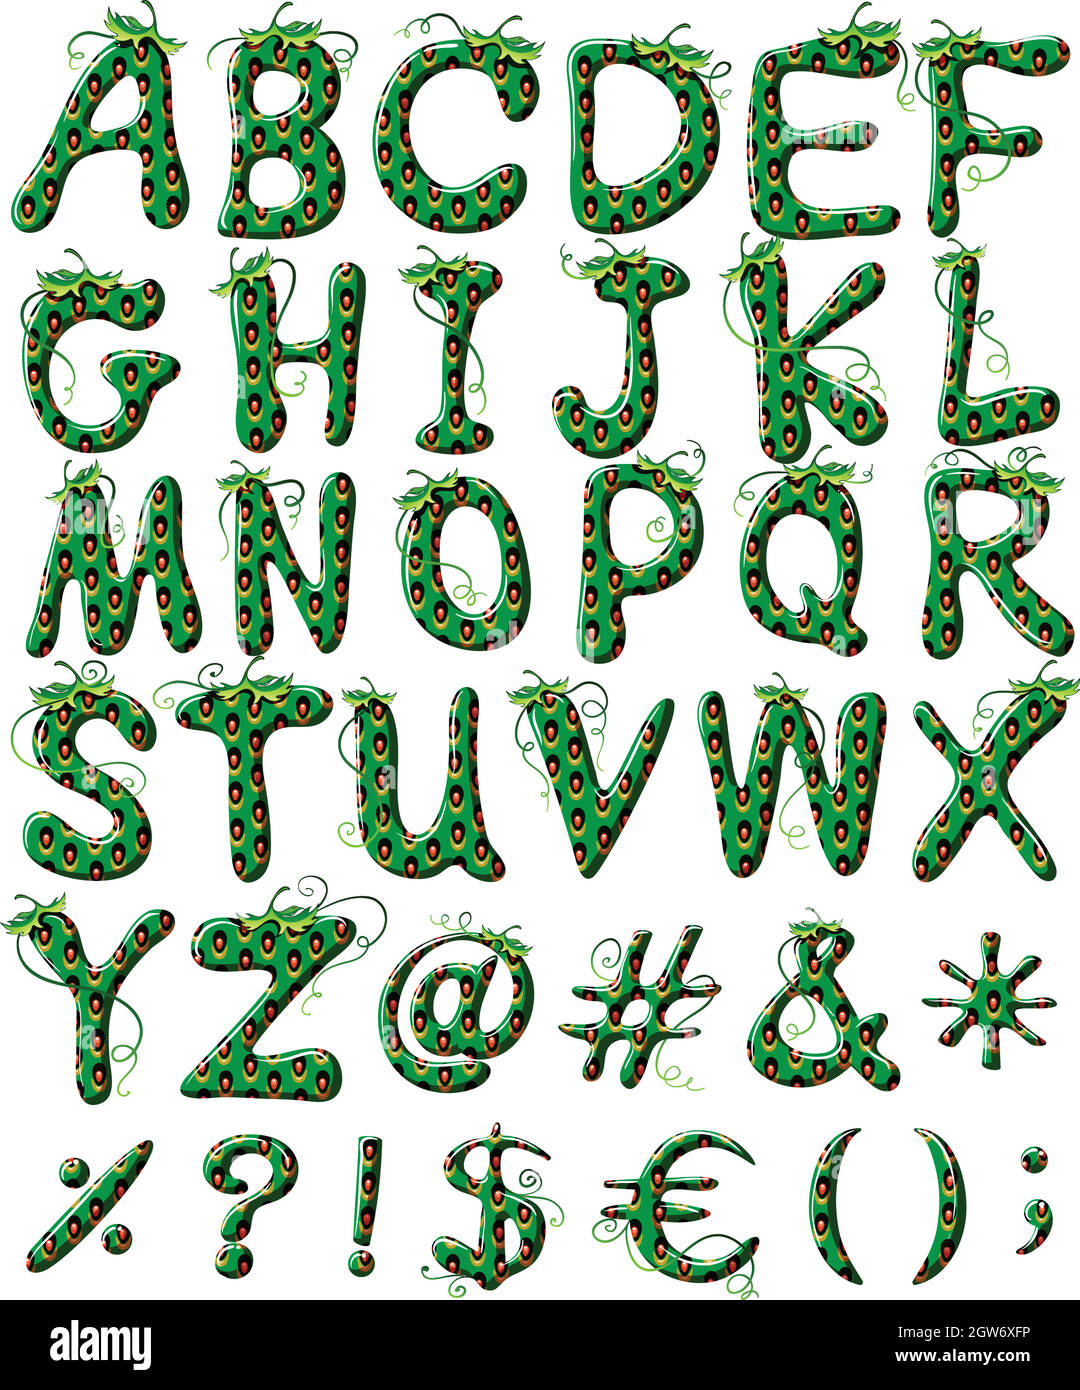 Großbuchstaben des Alphabets in grüner Farbe Stock Vektor